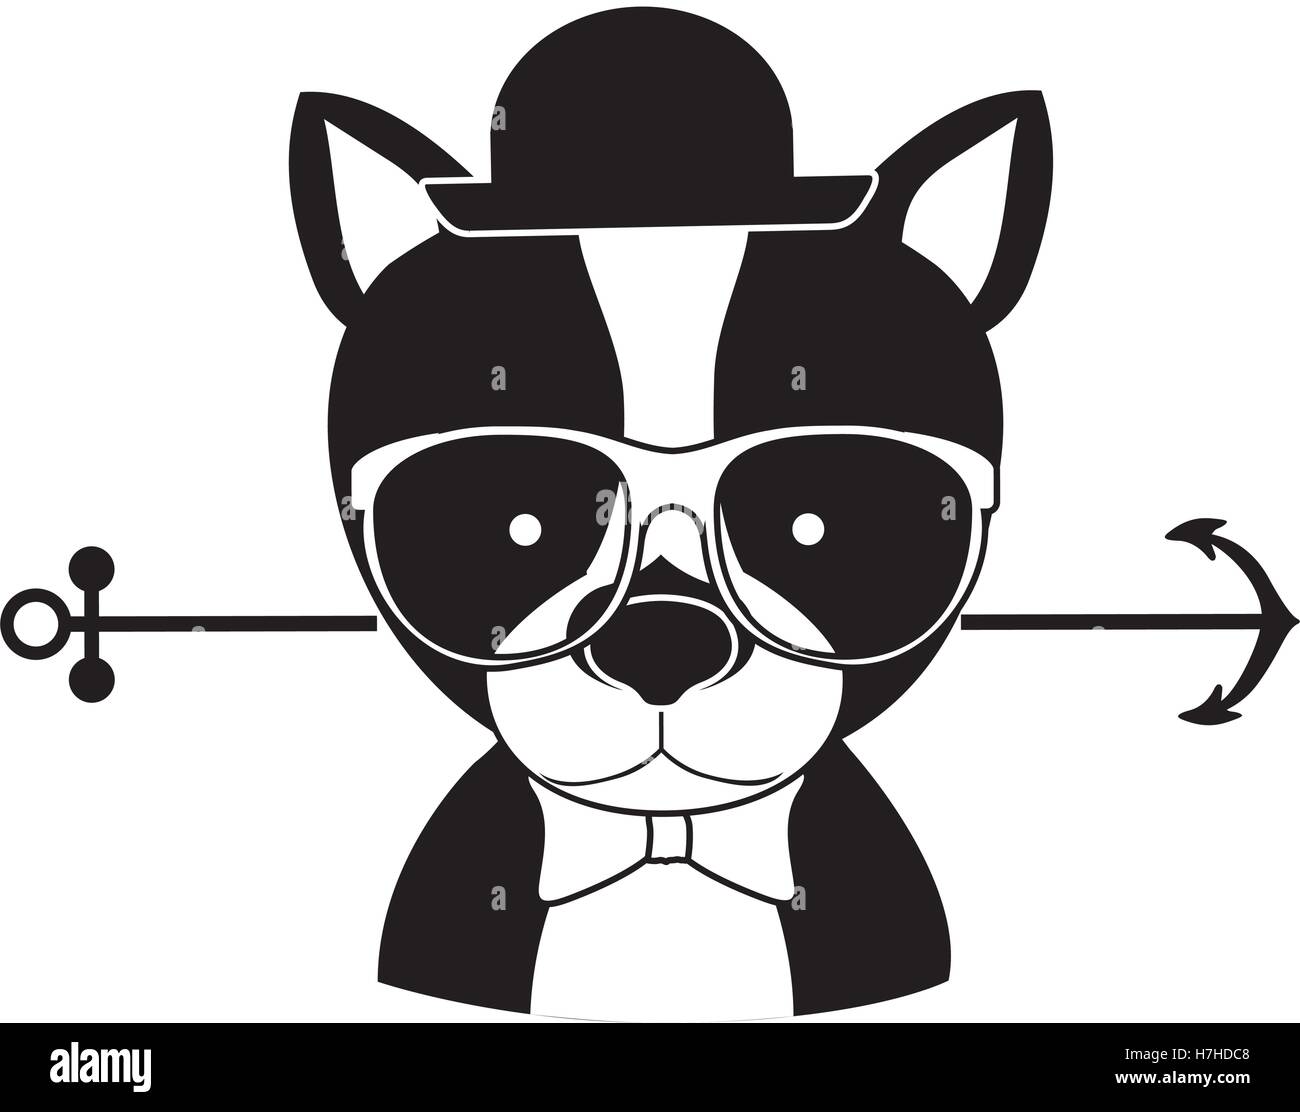 Comic-Hund mit Brille und Bogen tie.animal Hipster Lifestyle-Design.  Vektor-illustration Stock-Vektorgrafik - Alamy